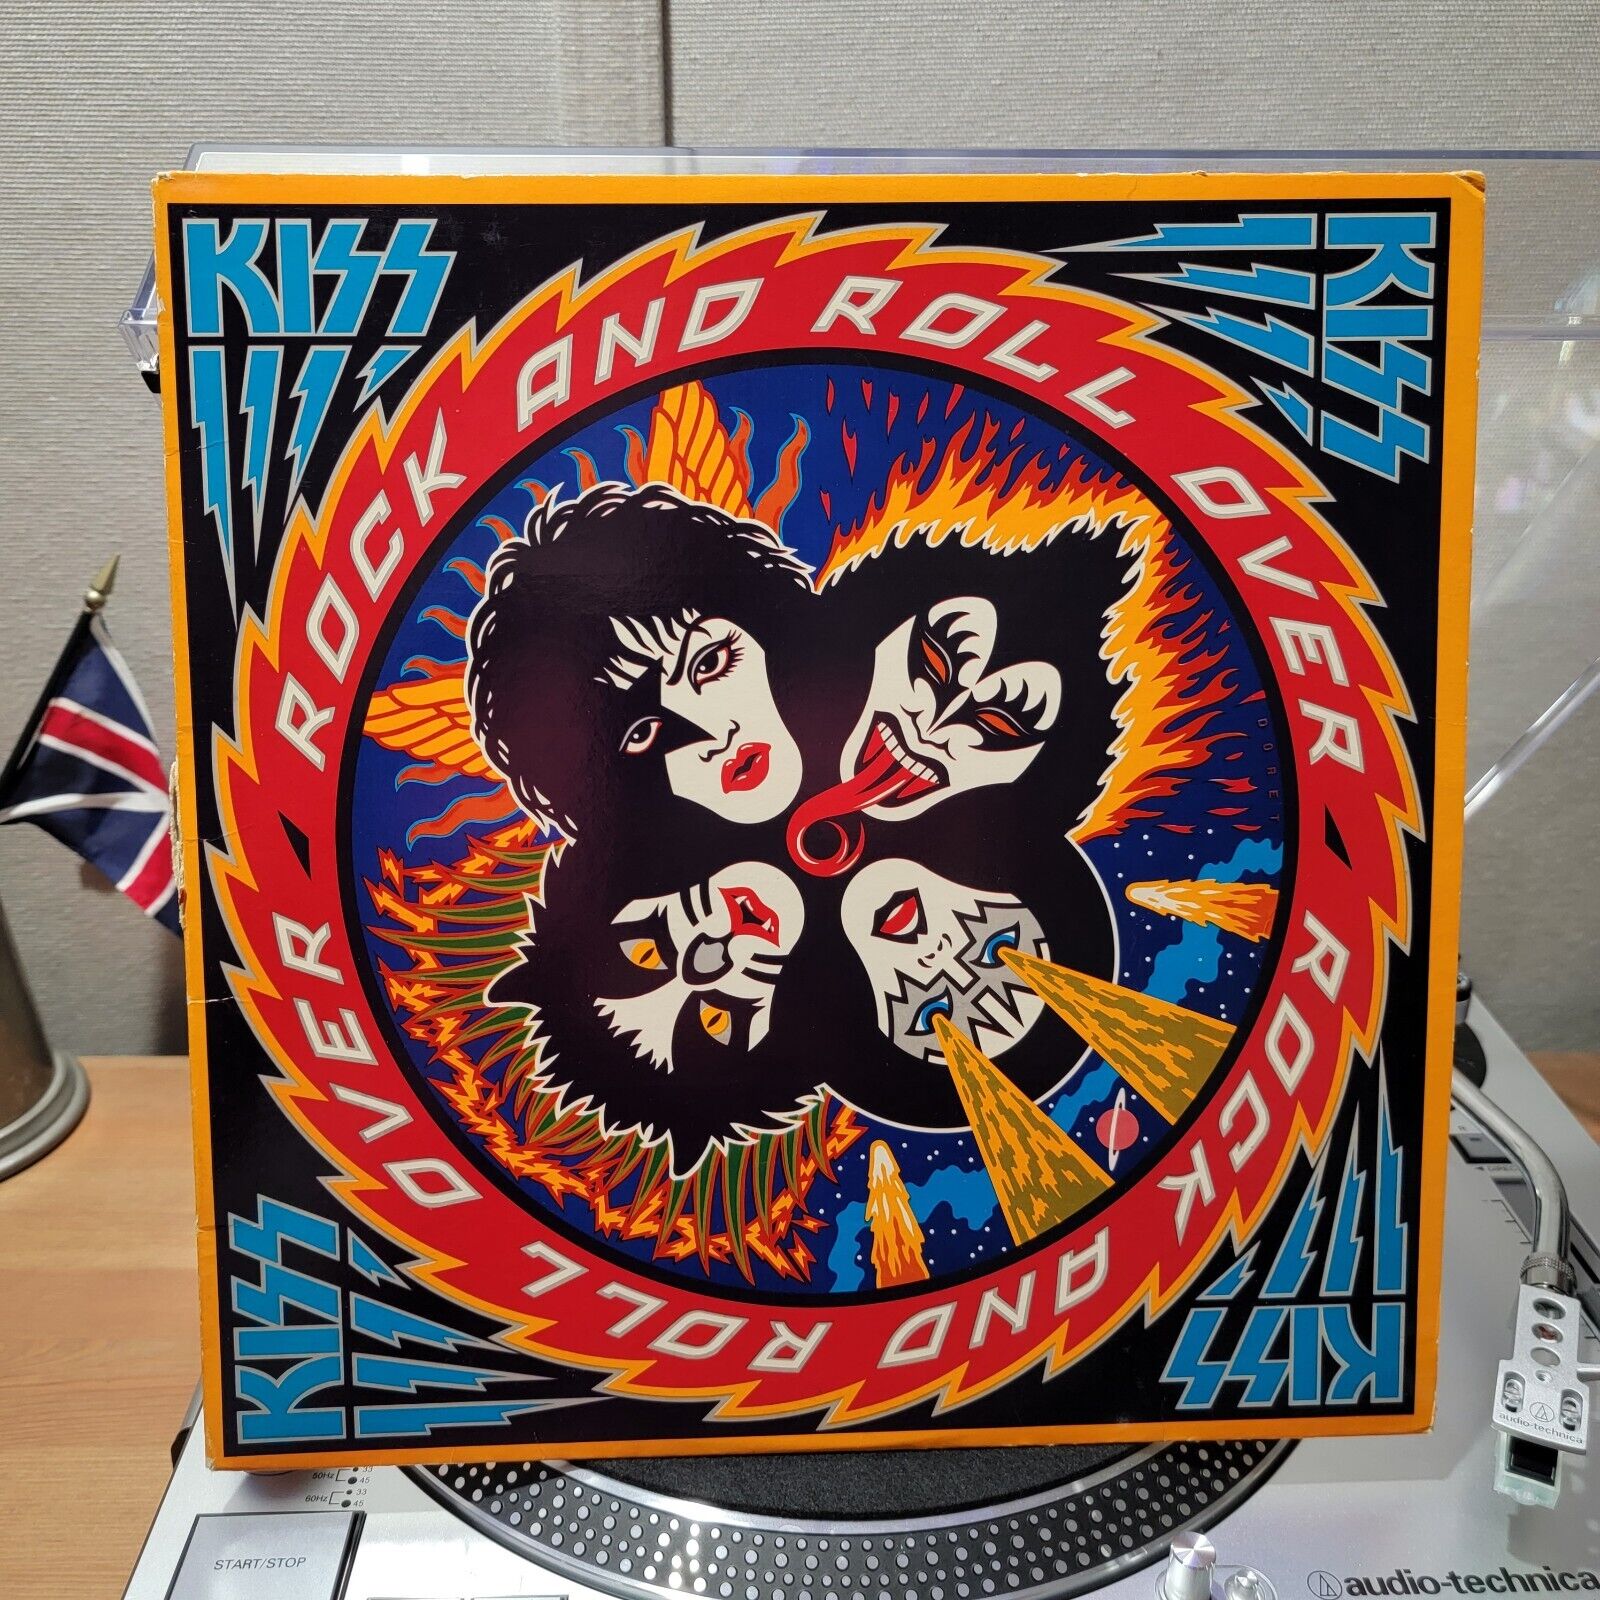 KISS Rock and Roll Over 1976 NBLP 7037 Casablanca Records Vinyl Album LP